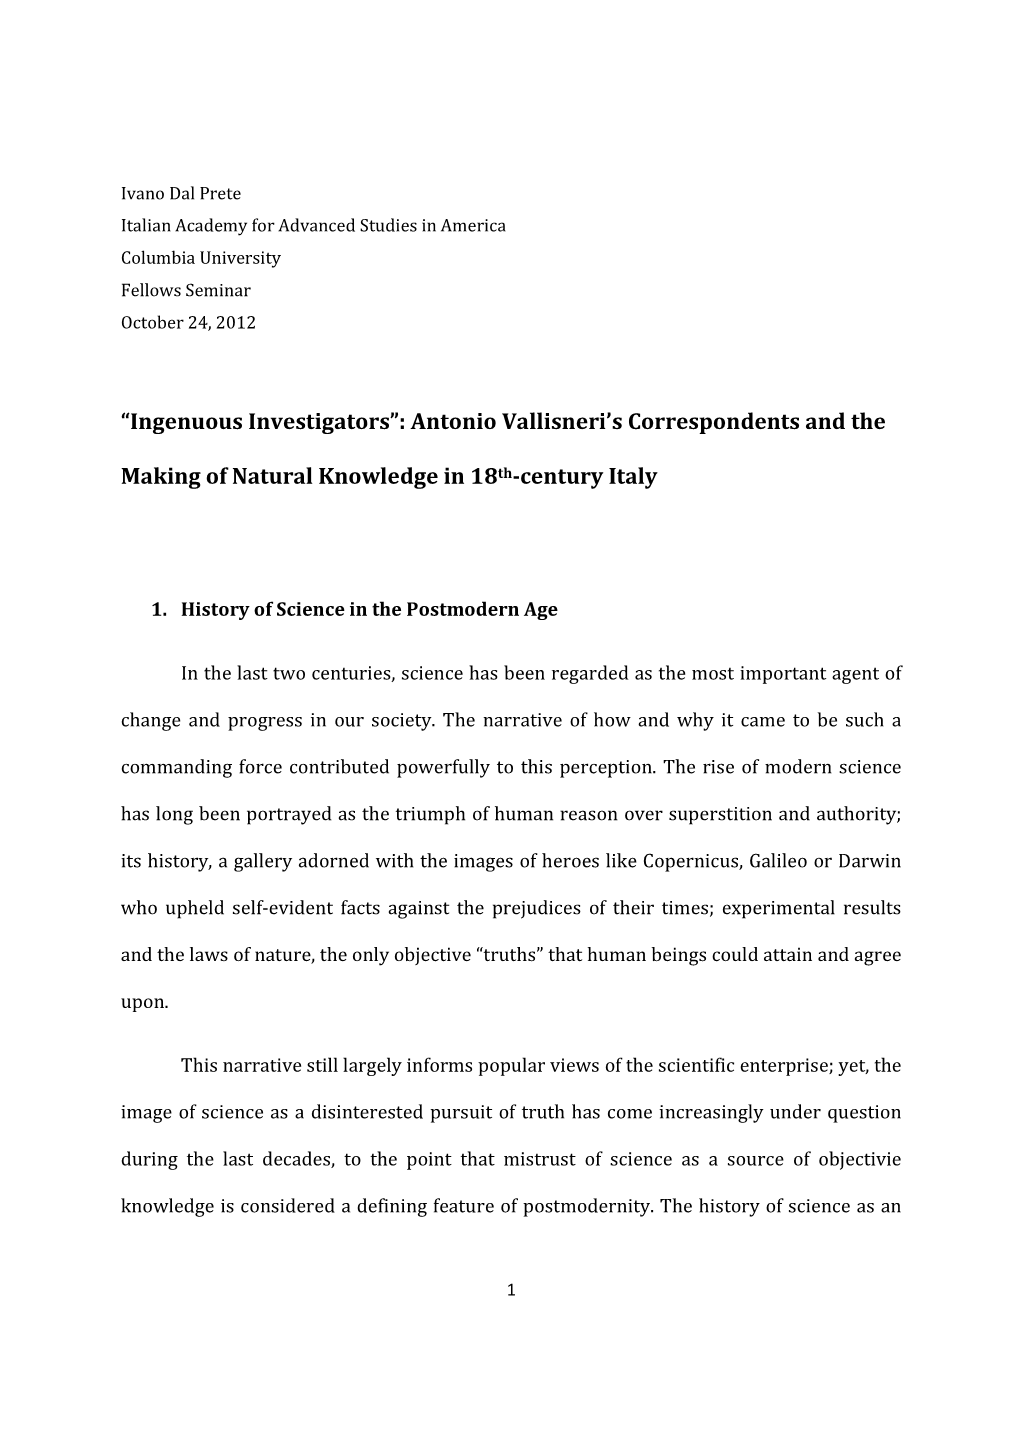 Ingenuous Investigators”: Antonio Vallisneri’S Correspondents and The